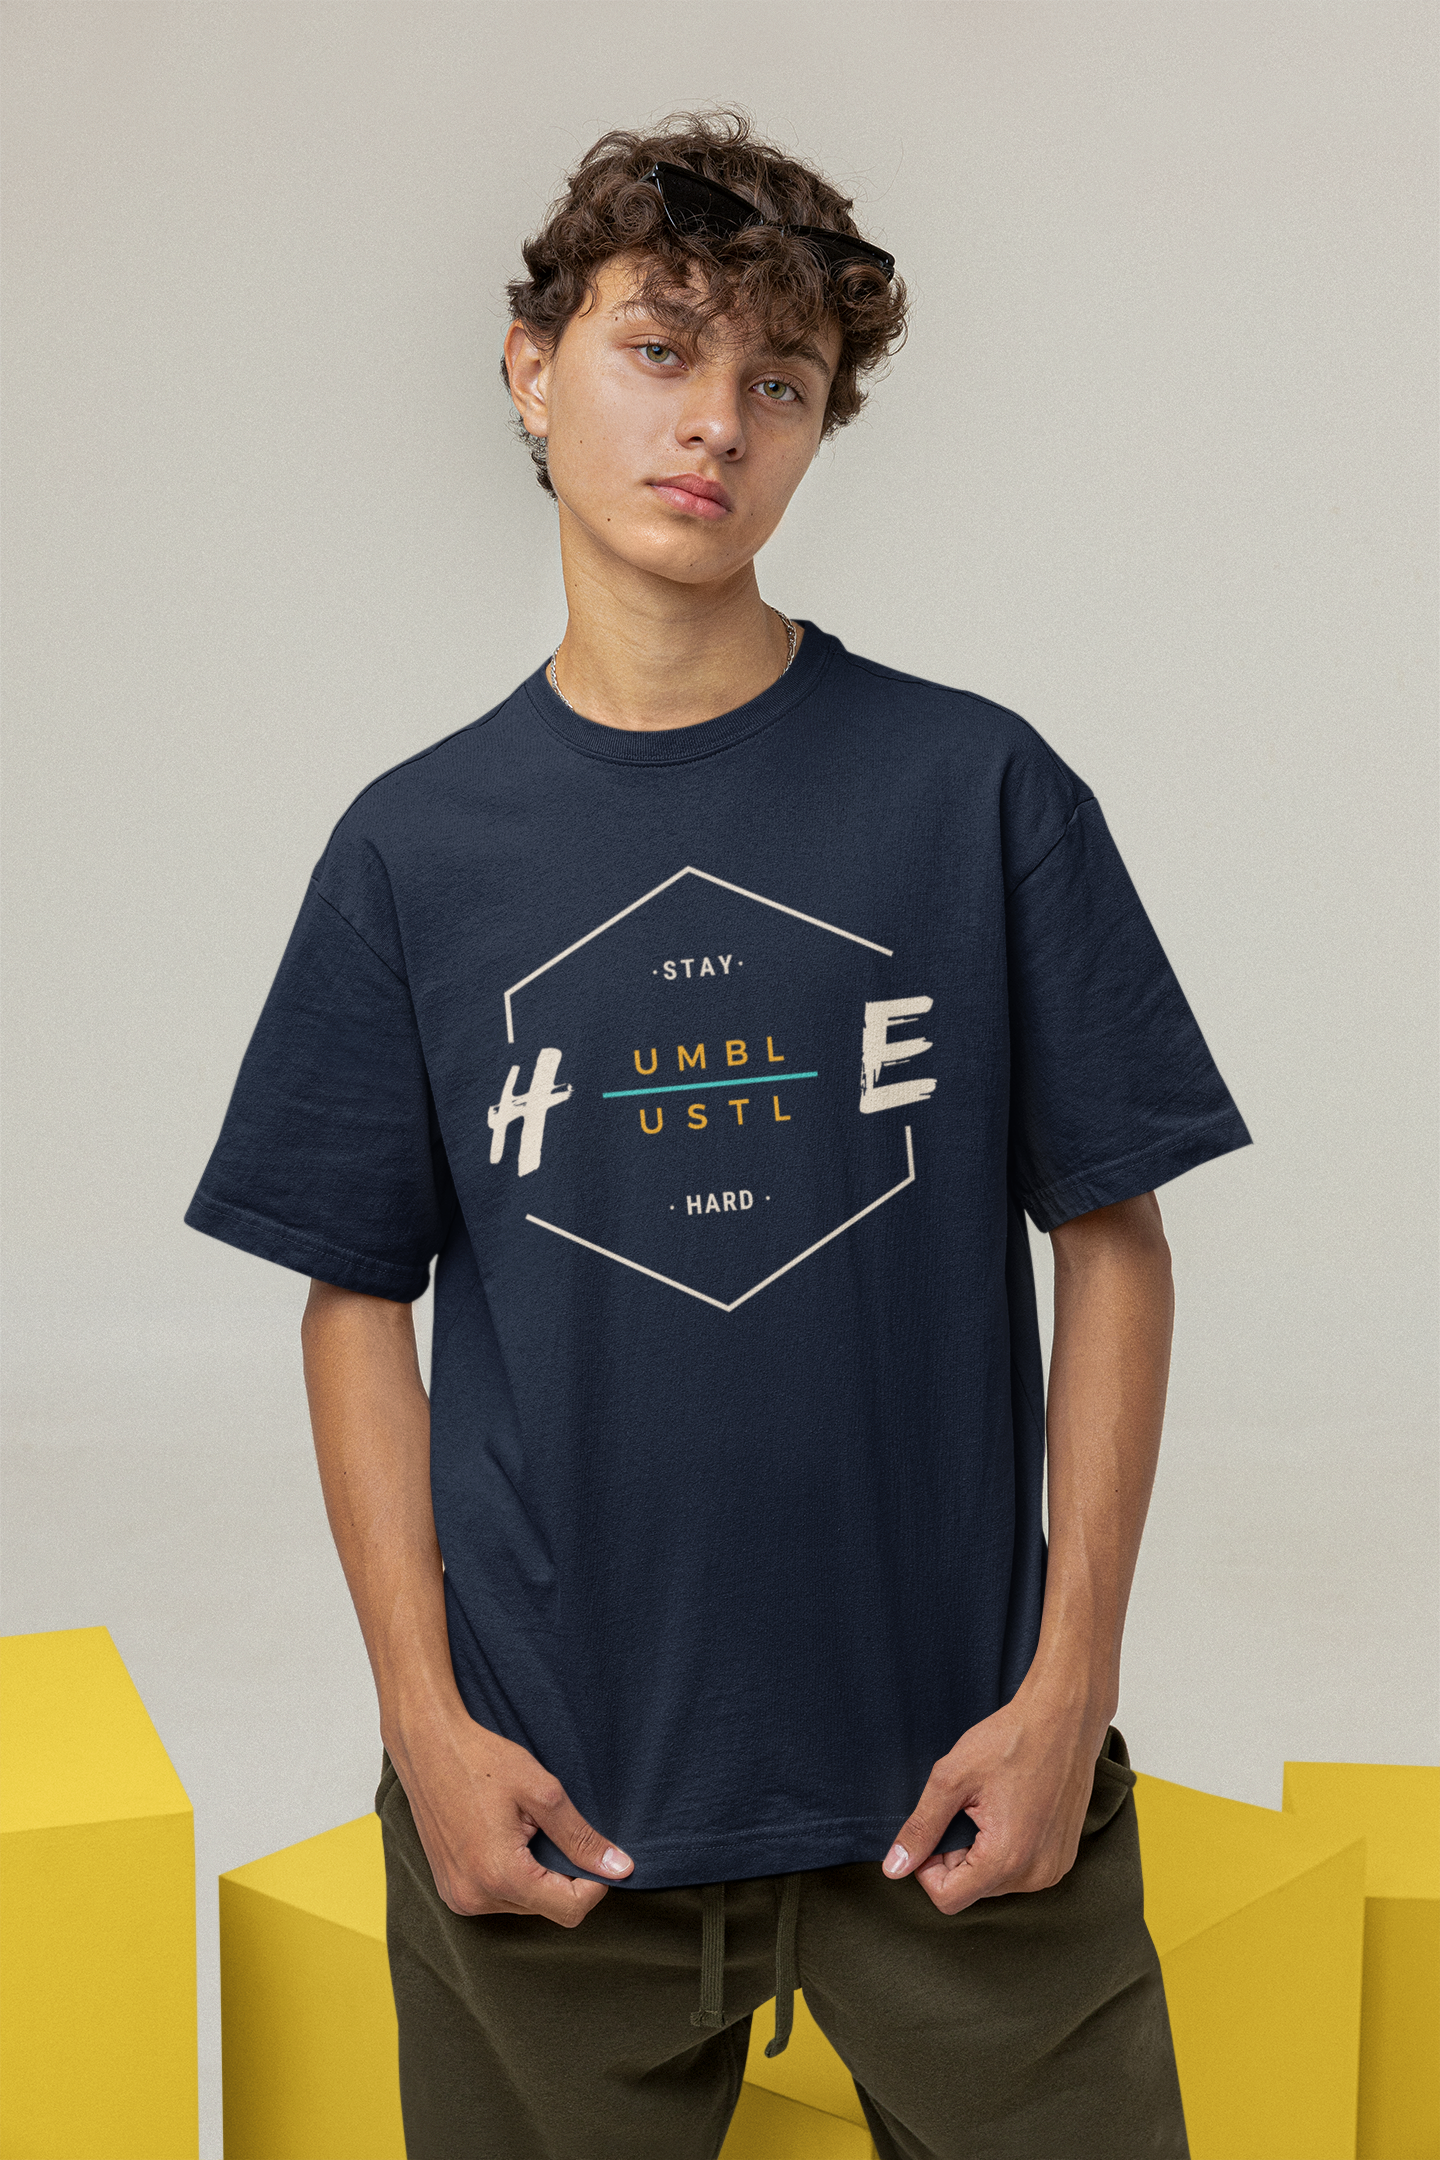 STAY HUMBLE, HUSTLE HARD - Oversized T-shirt NAVY BLUE